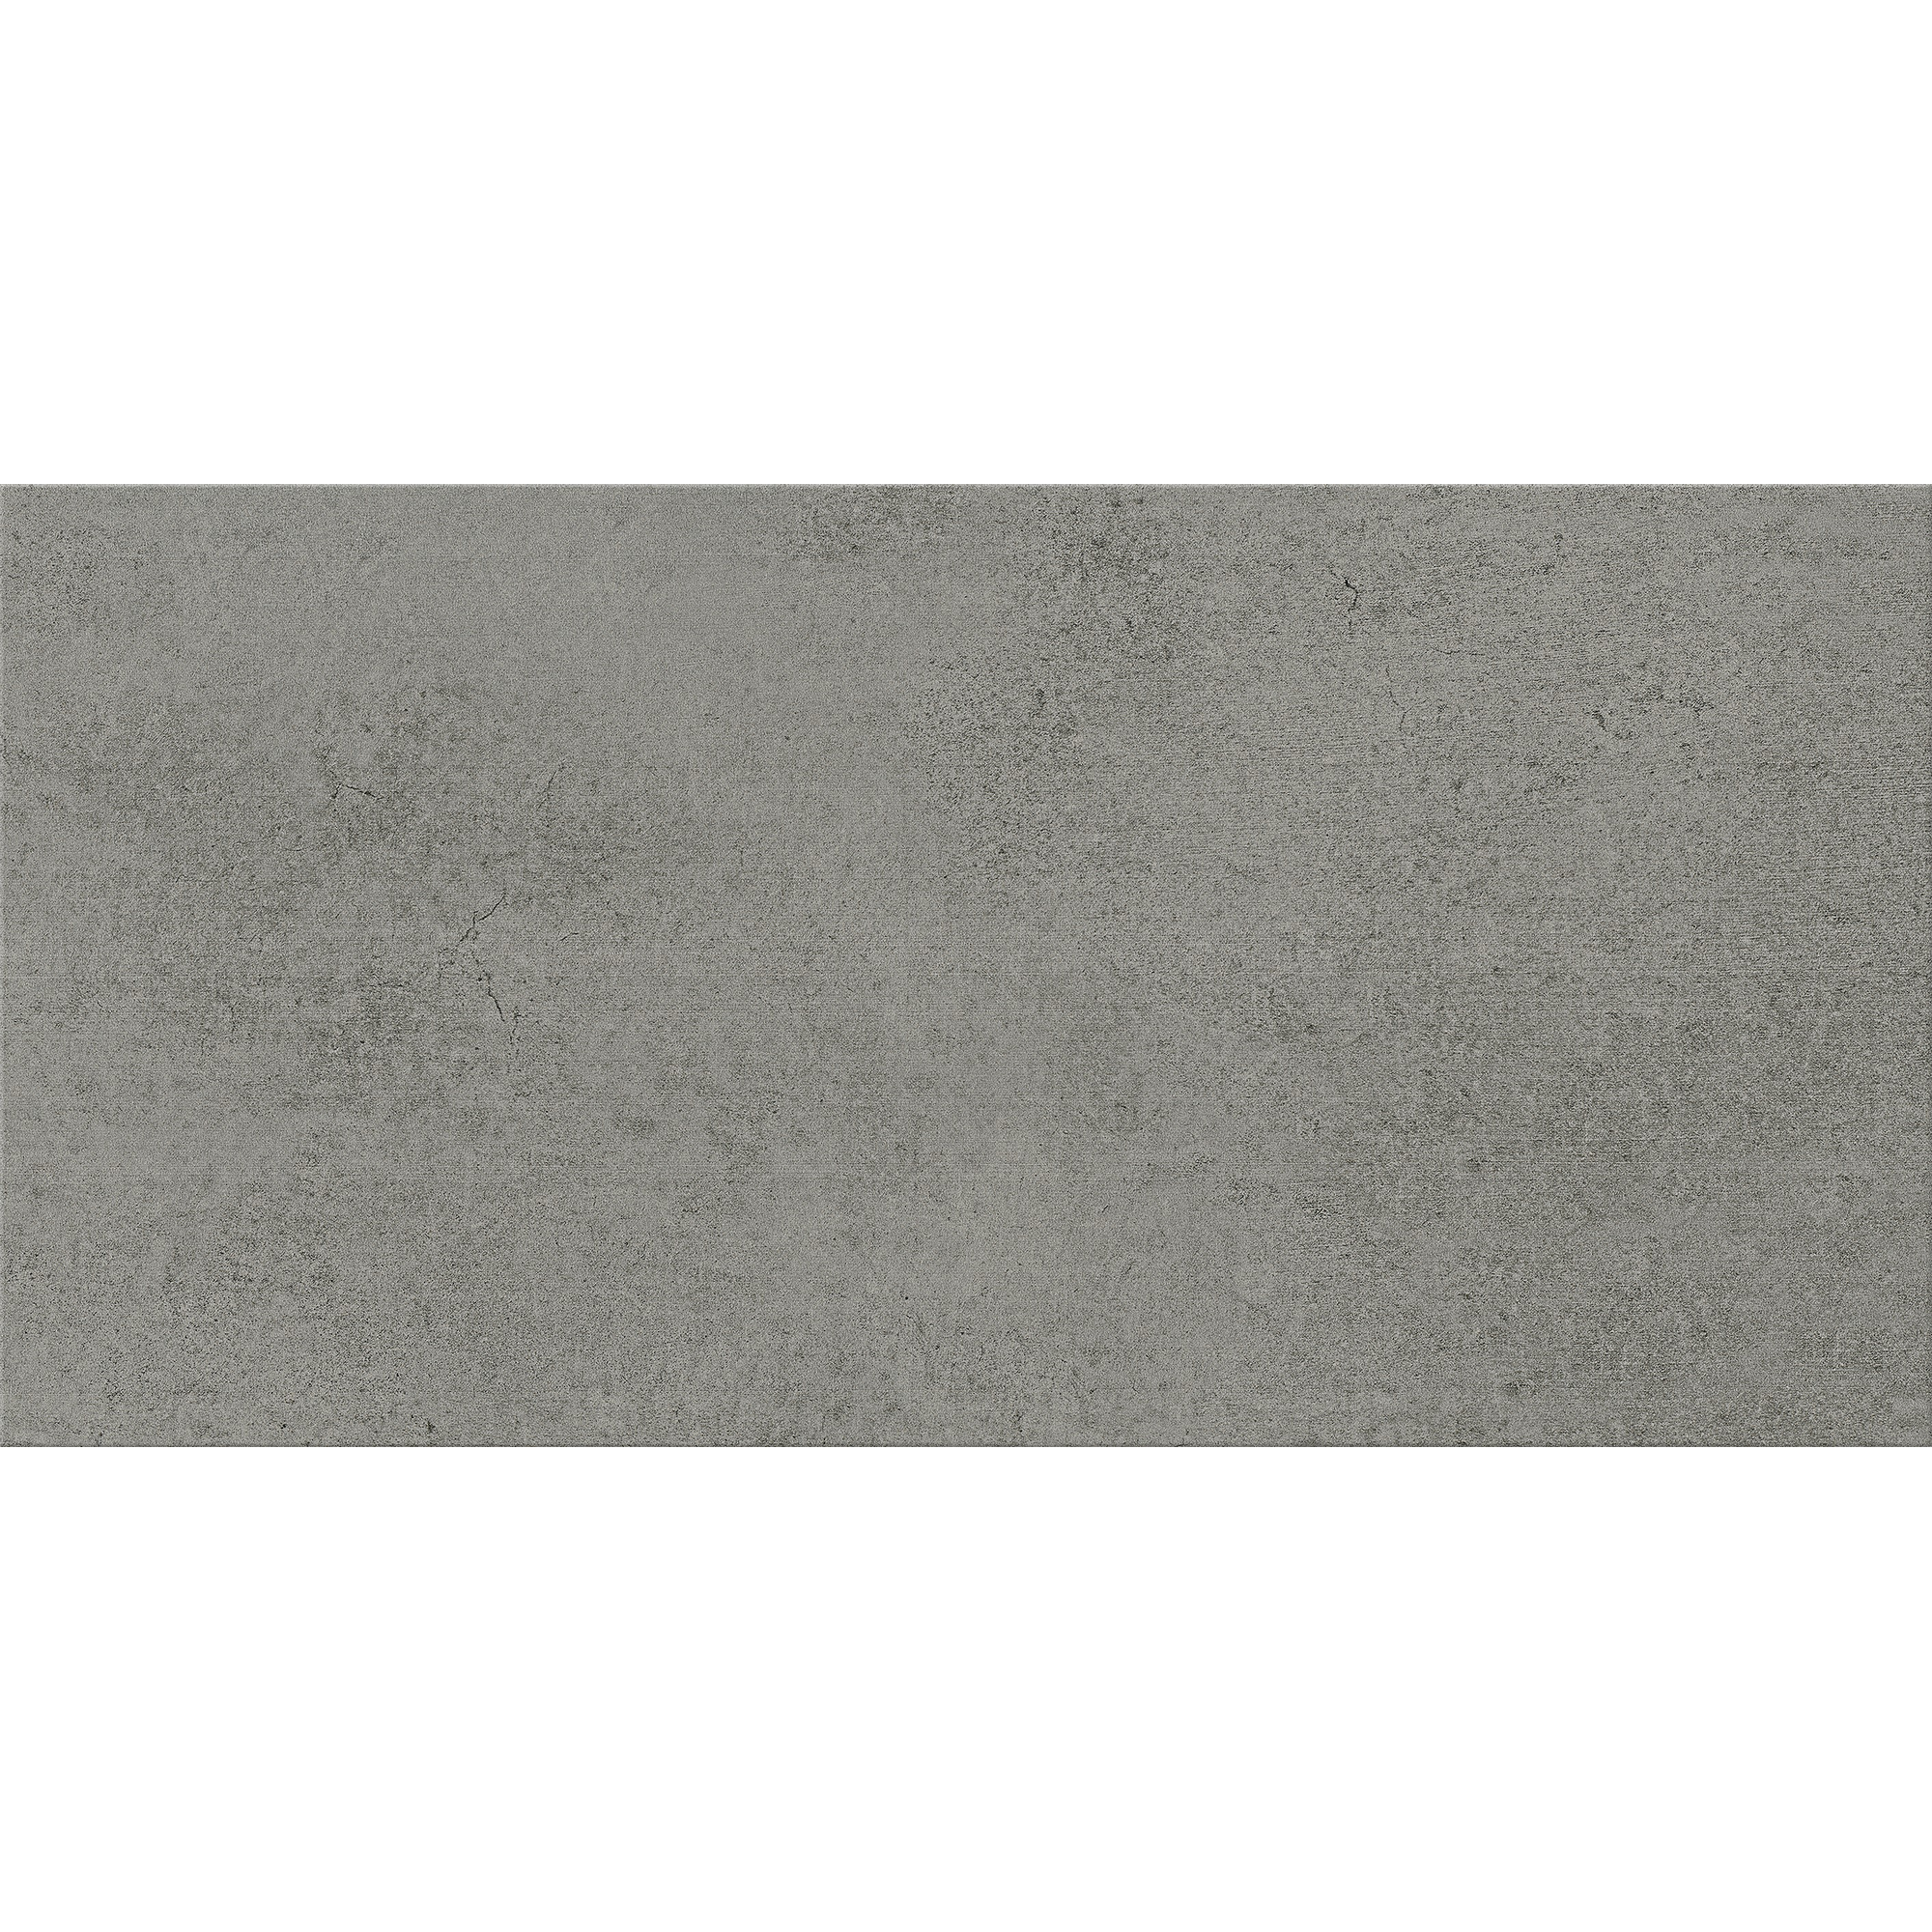 Bodenfliese 'Fog' Feinsteinzeug grau 29,8 x 59,8 cm + product picture